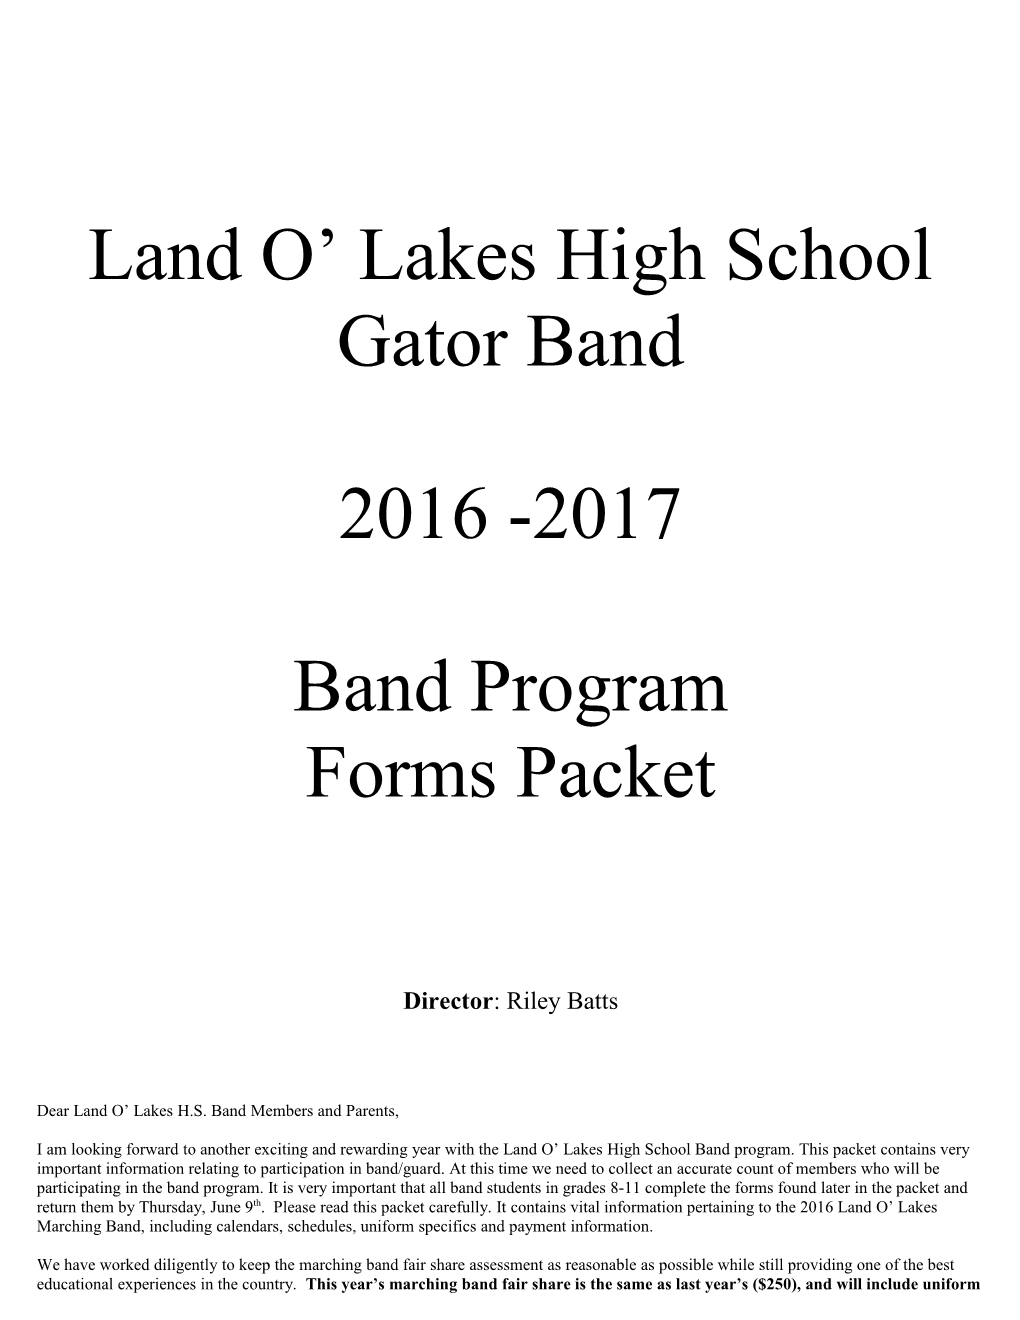 Land O Lakes High School Gator Band